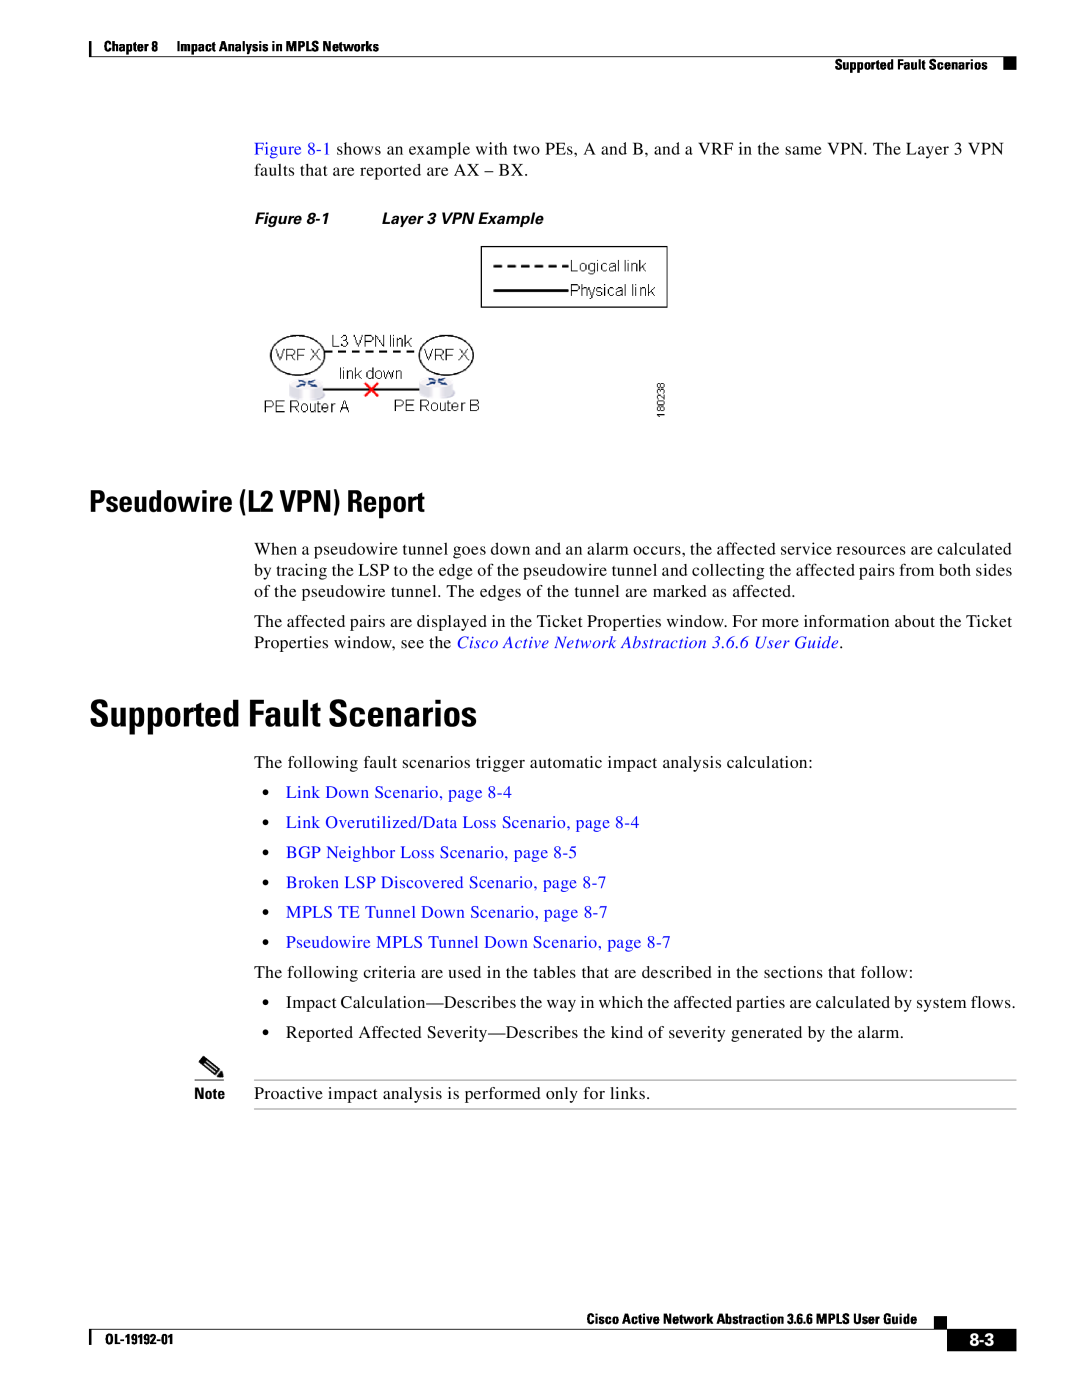 Cisco Systems 3.6.6 manual Supported Fault Scenarios, Pseudowire L2 VPN Report, MPLS TE Tunnel Down Scenario, page 